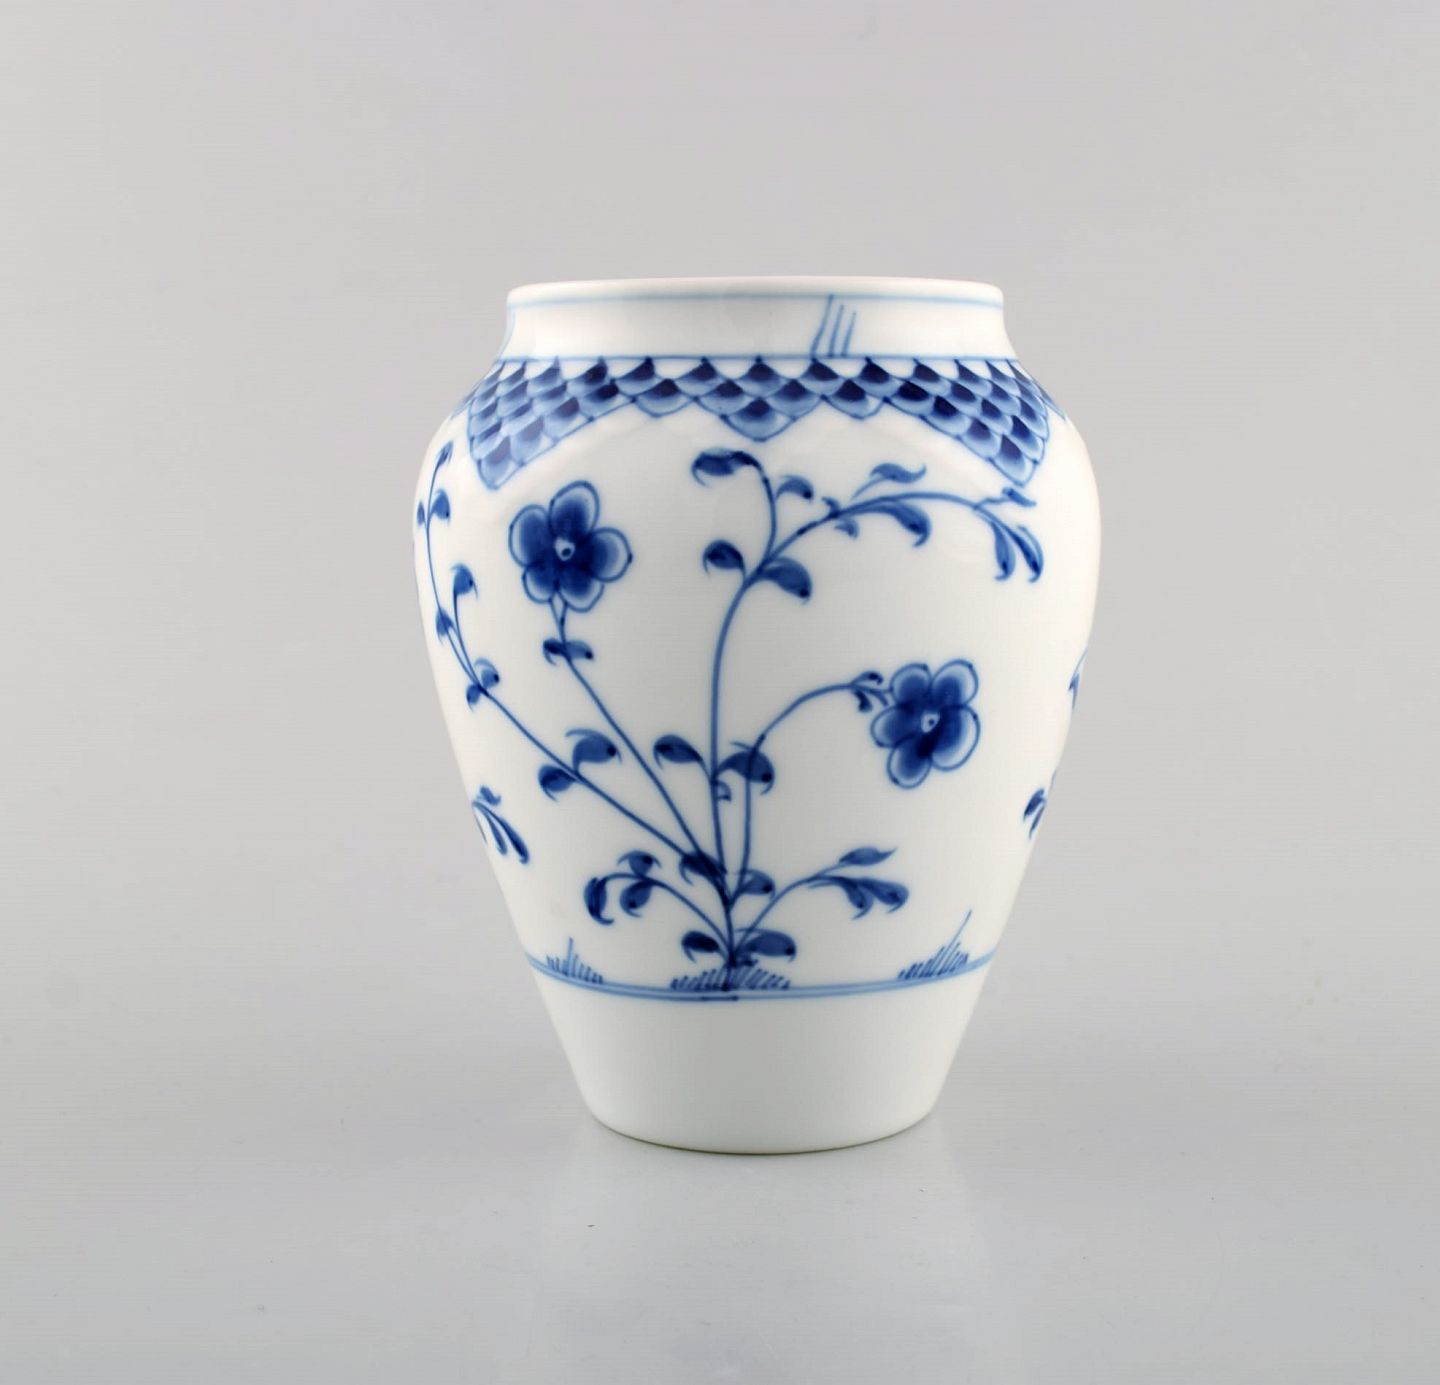 WorldAntique.net - Bing & / B&G, "Butterfly". Vase in painted porcelain. * Model Number: 681.